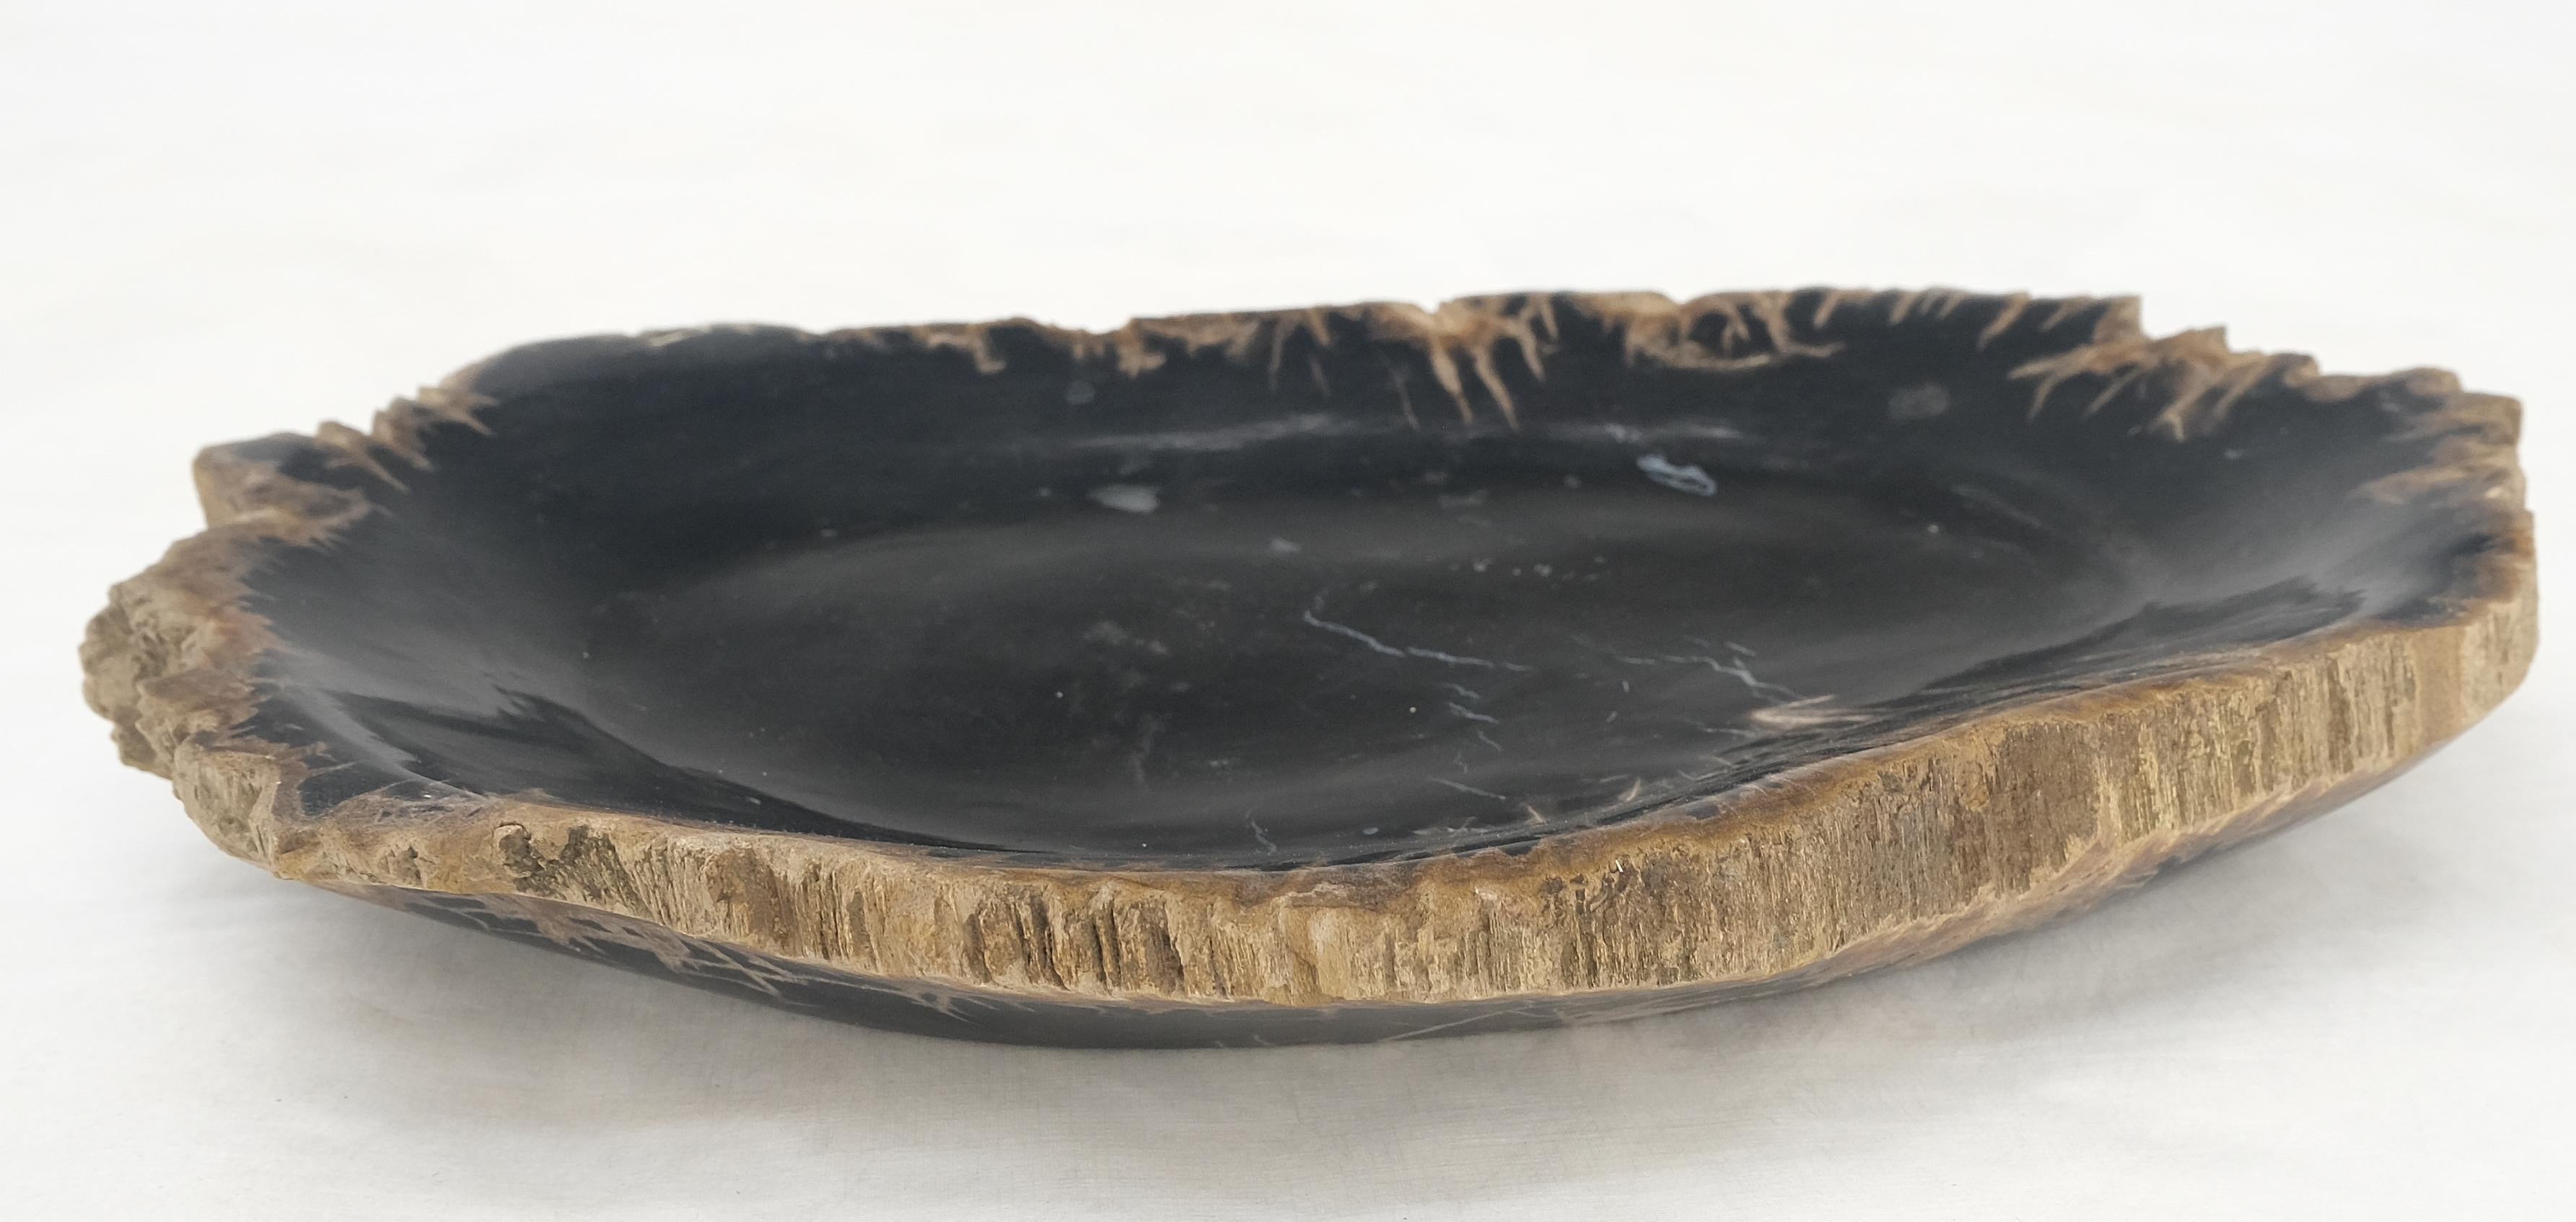 Polished Petrified Wood Heart Shape Solid Black Elongated Bowl Dish Large Plate Ashtray For Sale